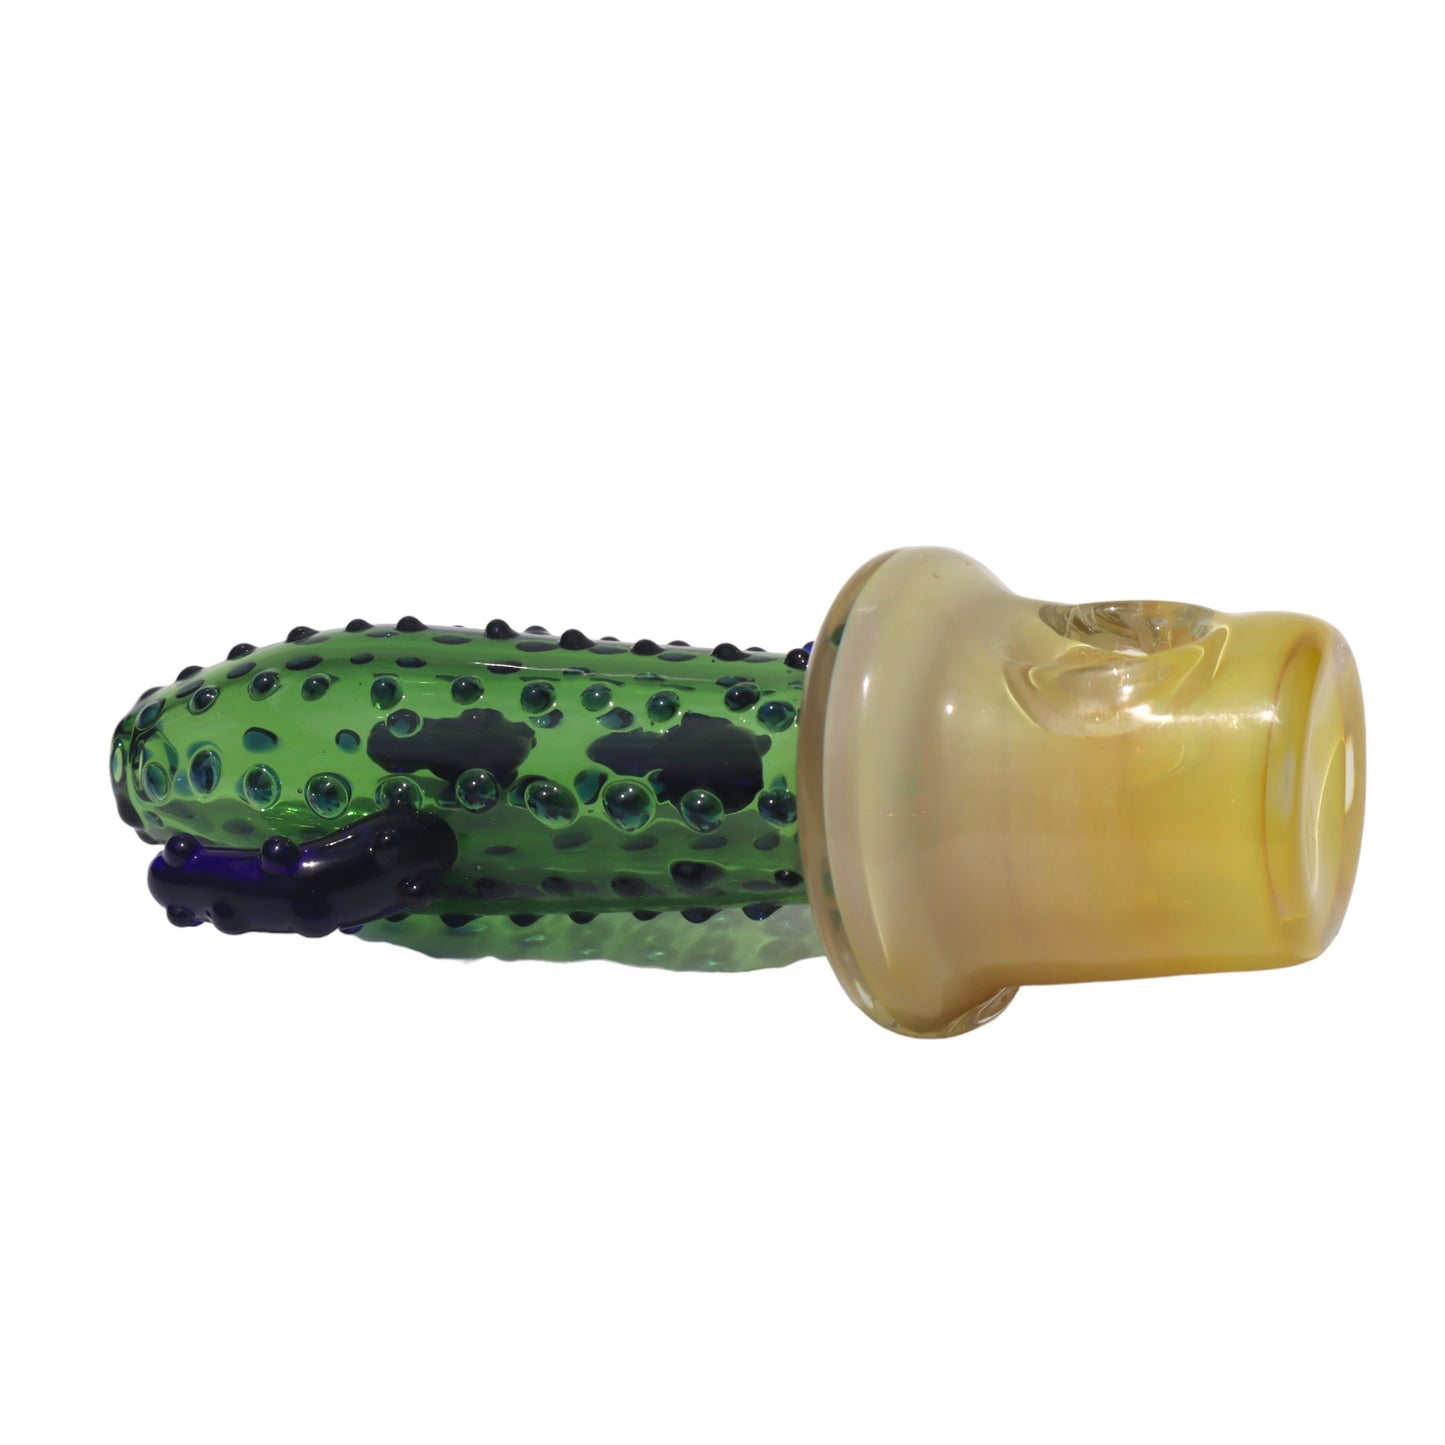 BrokeBois - Cactus Glass Handpipe